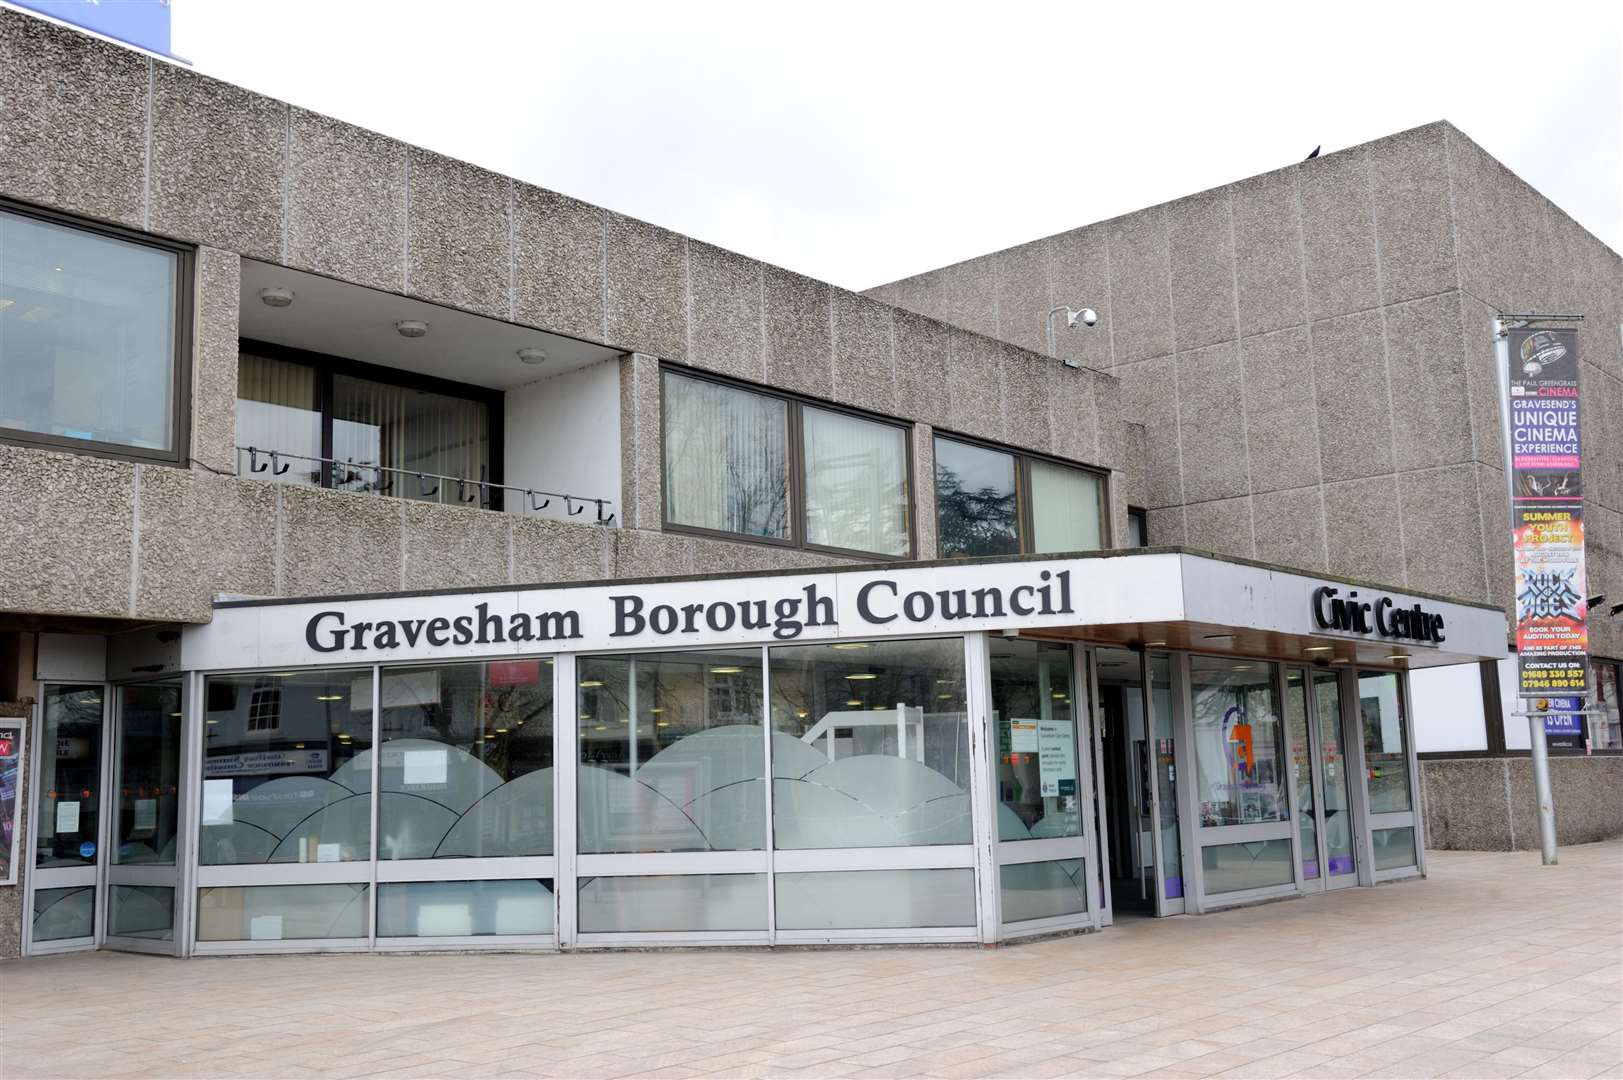 The vote took place at Gravesham Borough Council Civic Centre